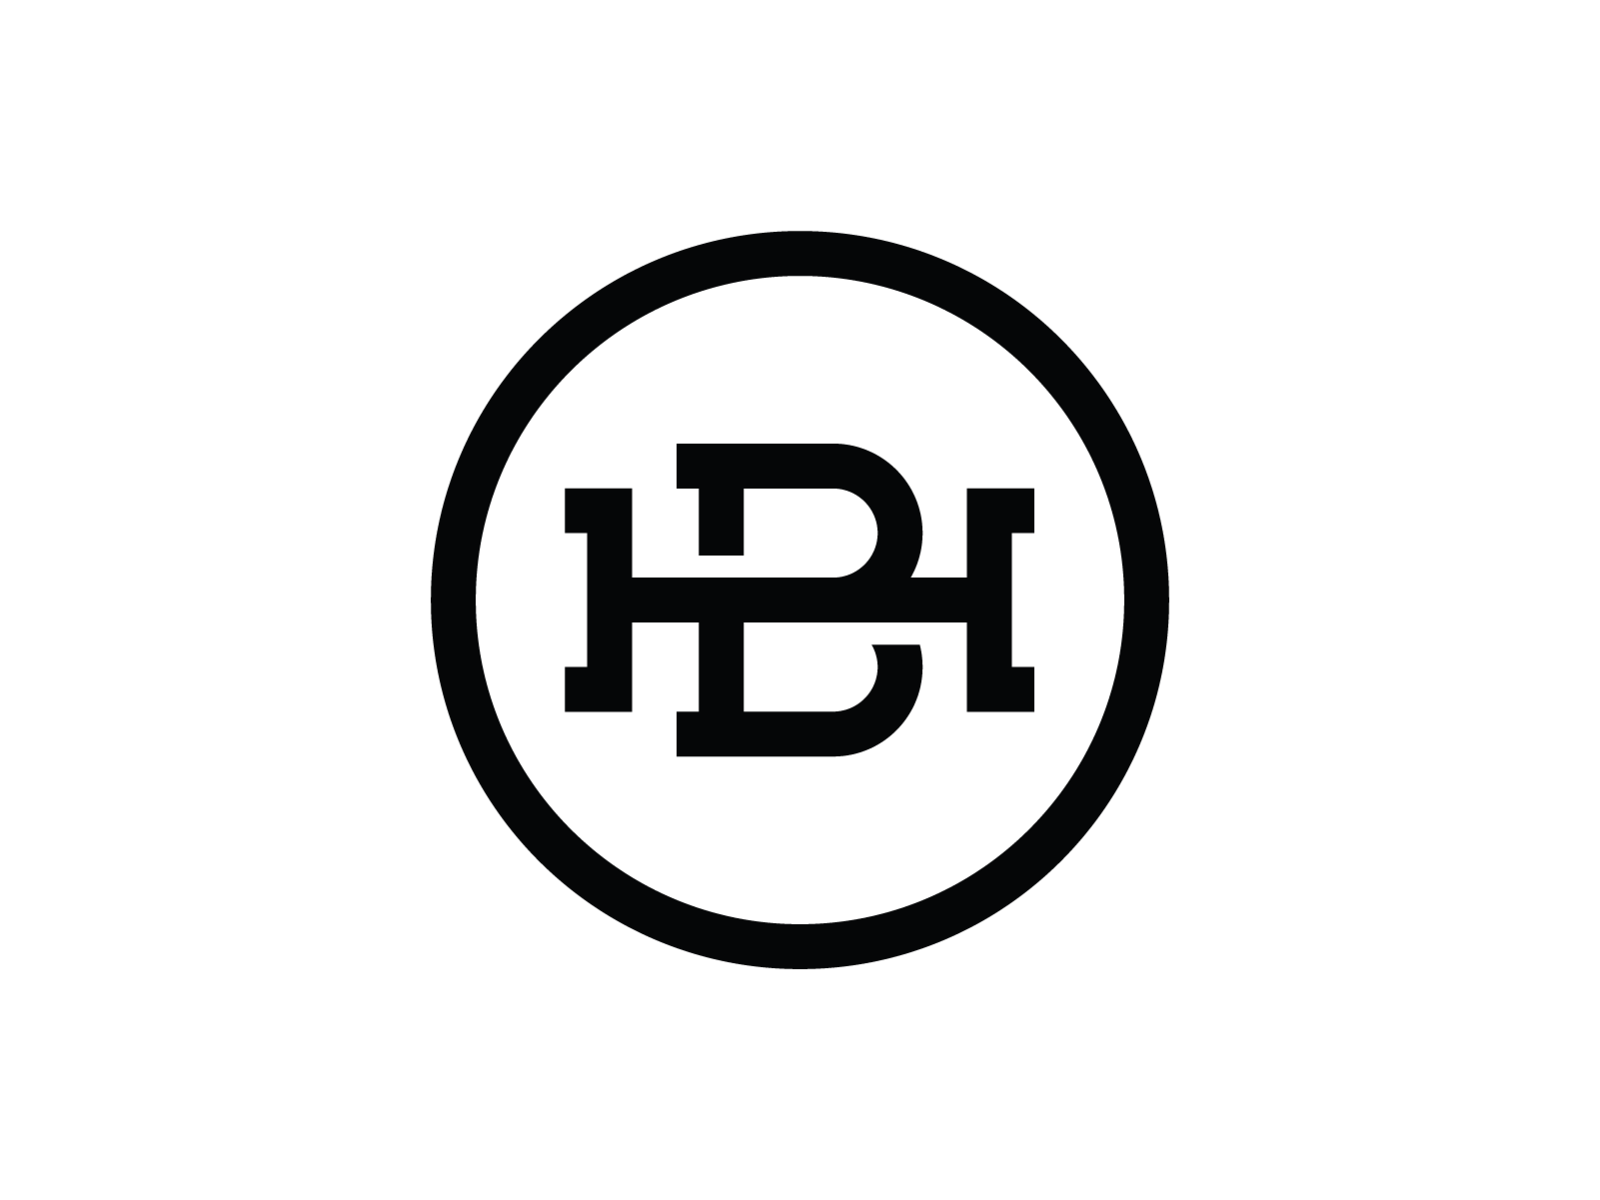 BH Monogram by Bram Huinink on Dribbble